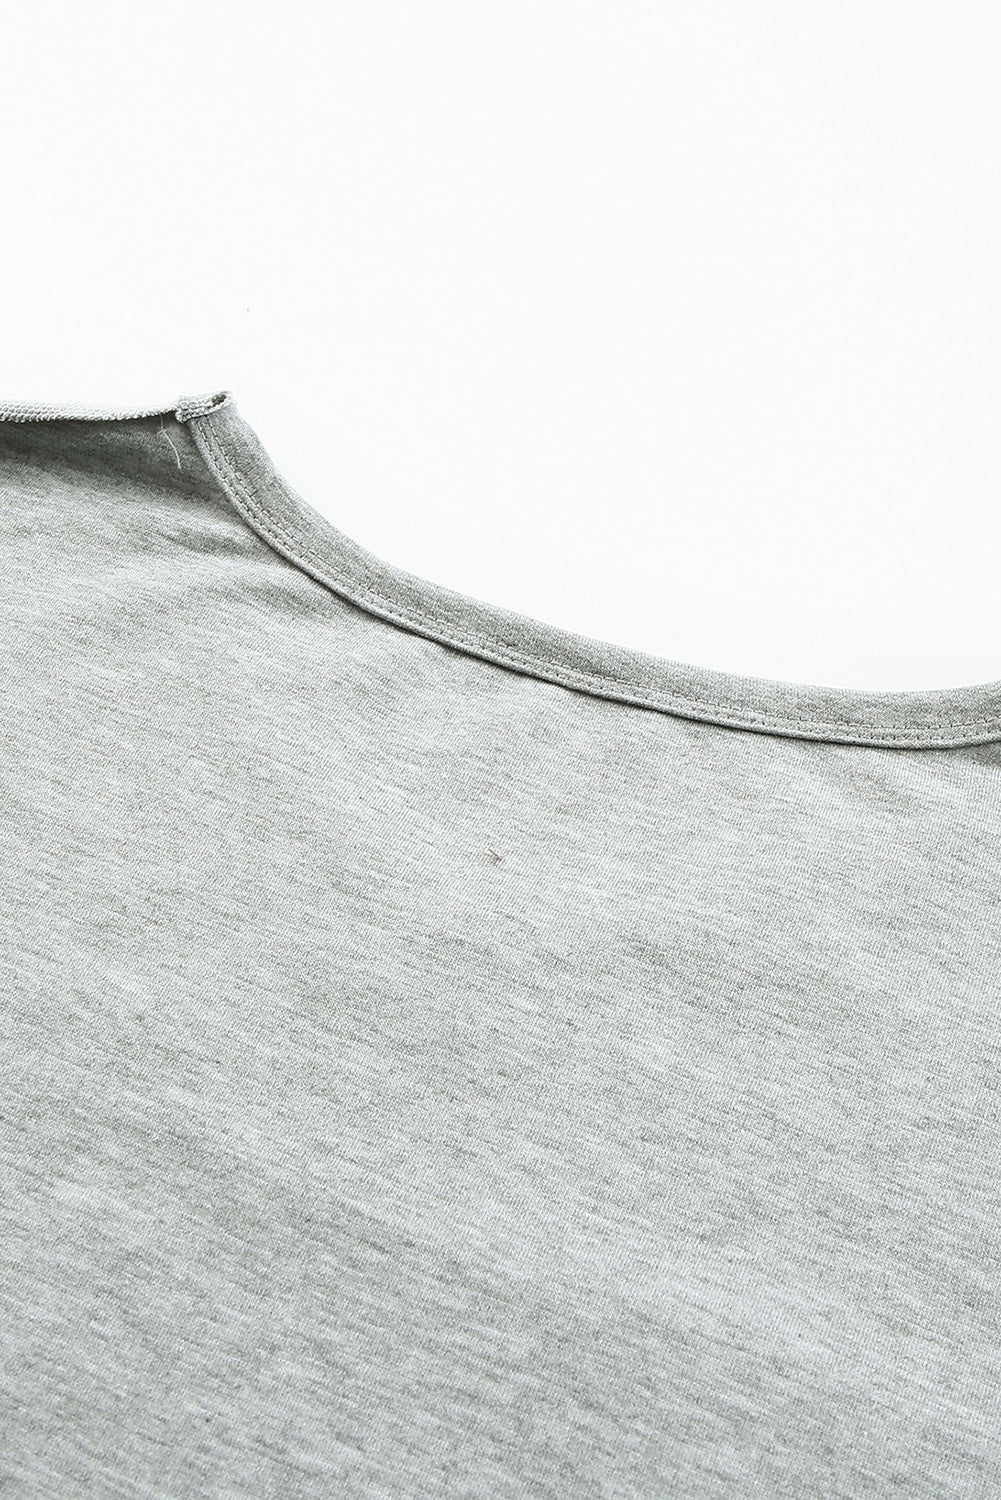 Grey V Neck Exposed Seam Drop Shoulder Long Sleeve Top